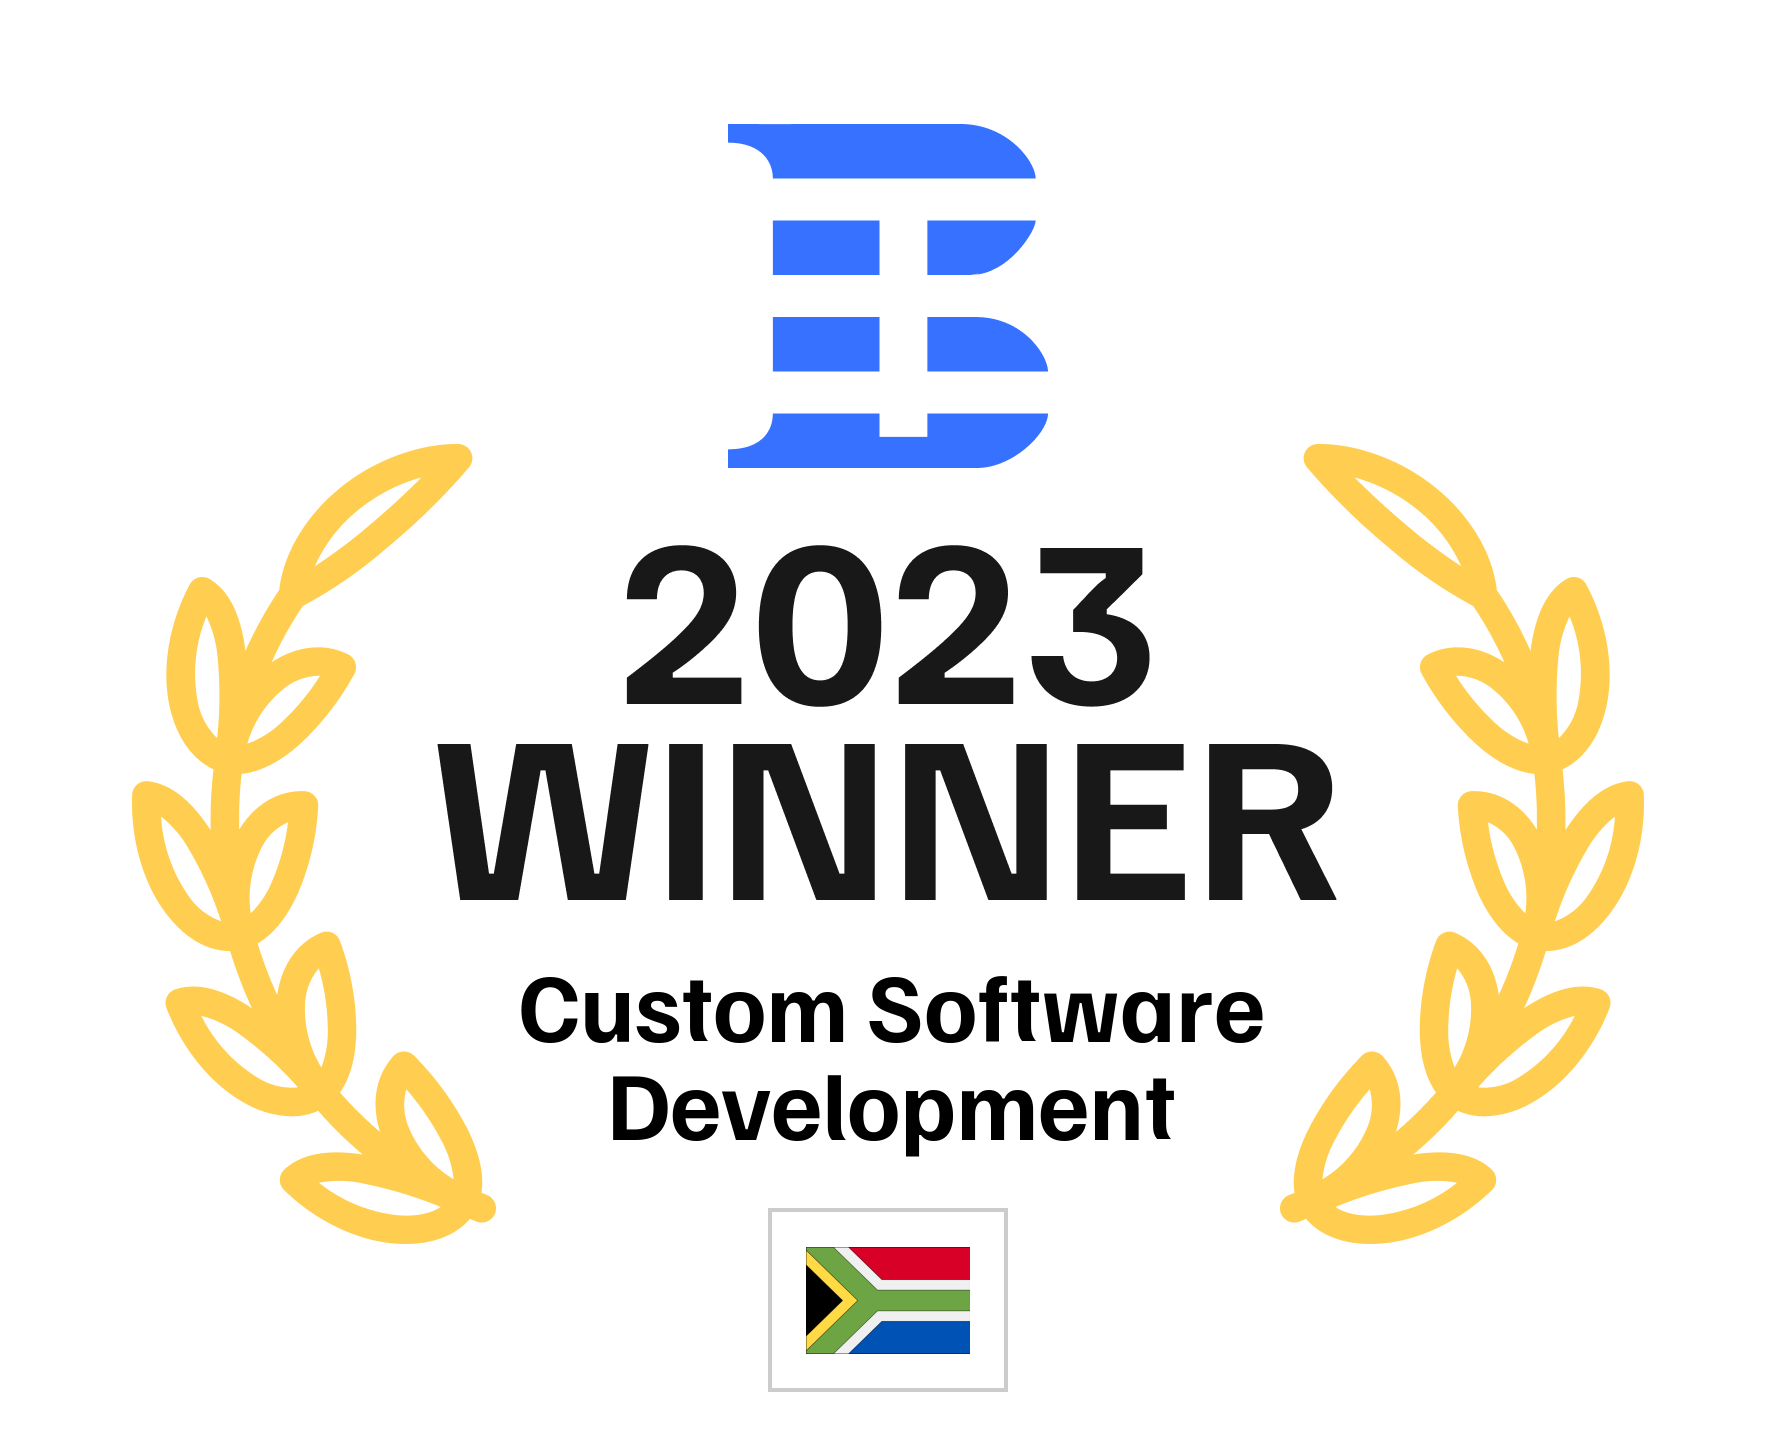 Livex Best Software Company Award